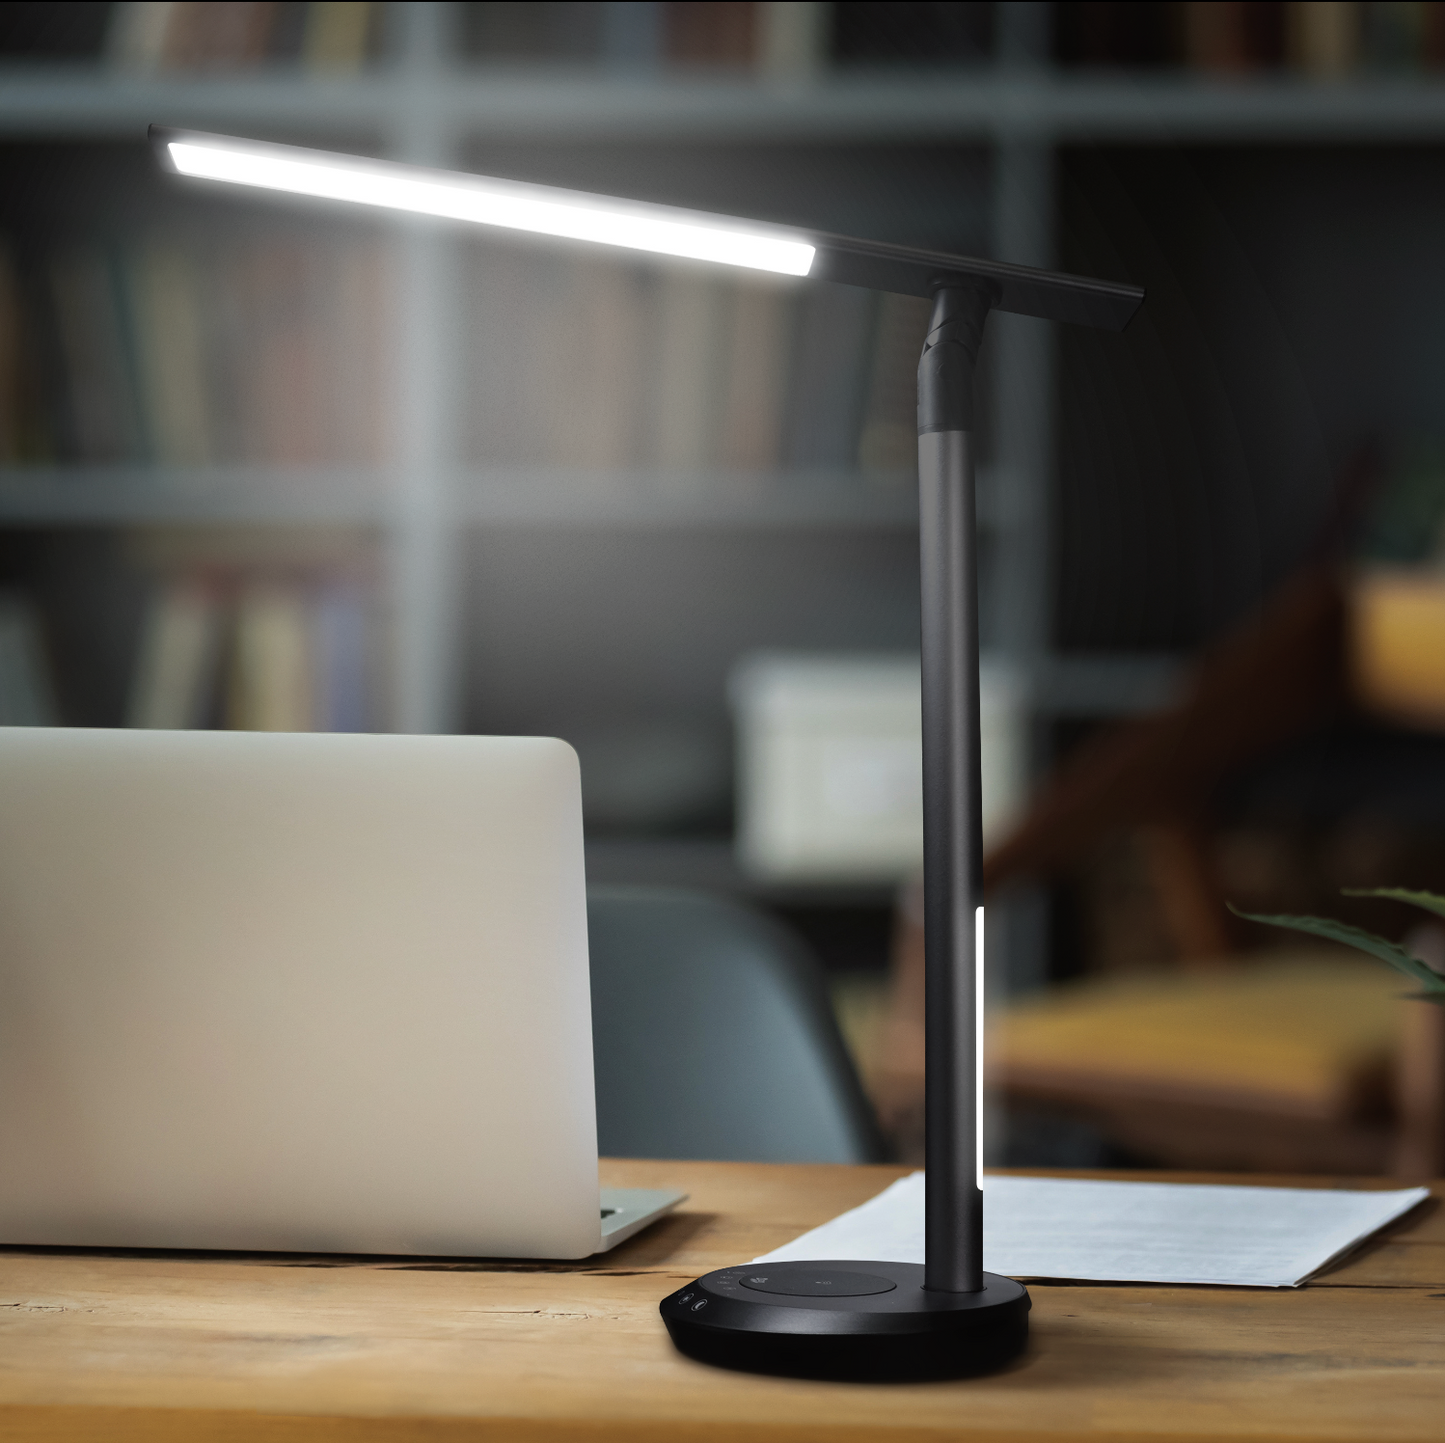 (Top Selling) 10,000mAh Dual Light Wireless LED Table Lamp